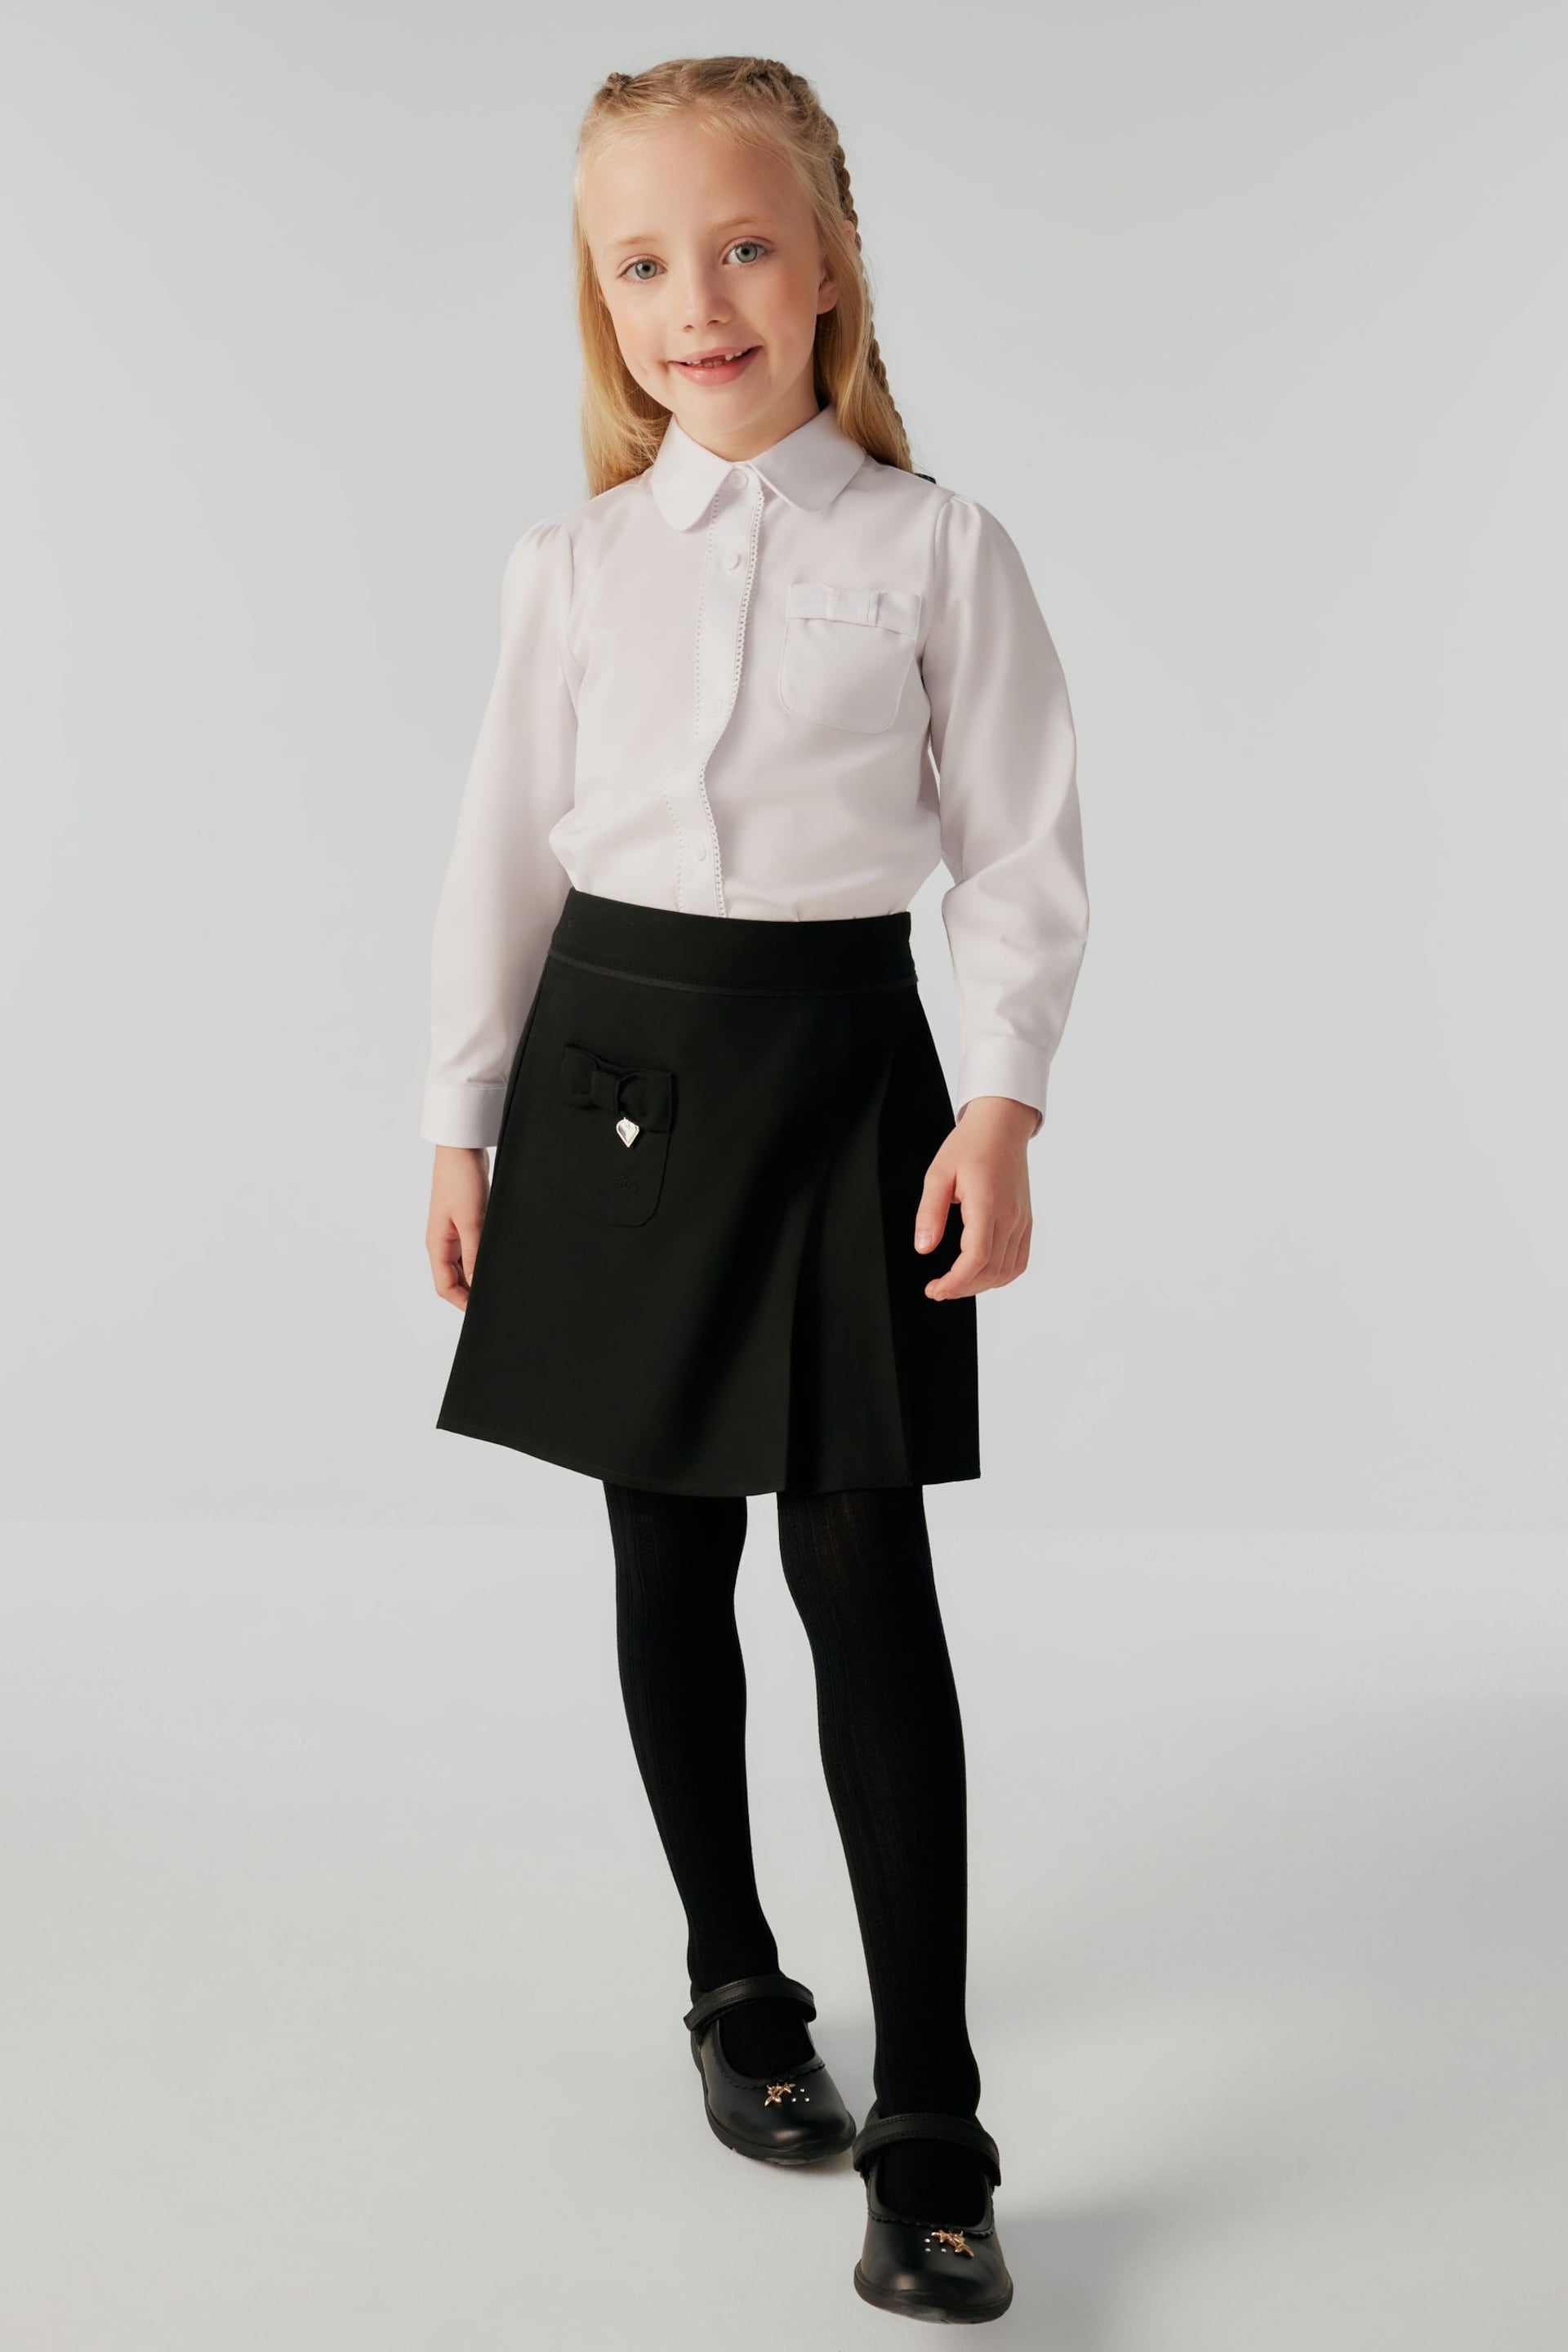 Clarks Grey School Pleat Kilt Skirt - Image 1 of 6